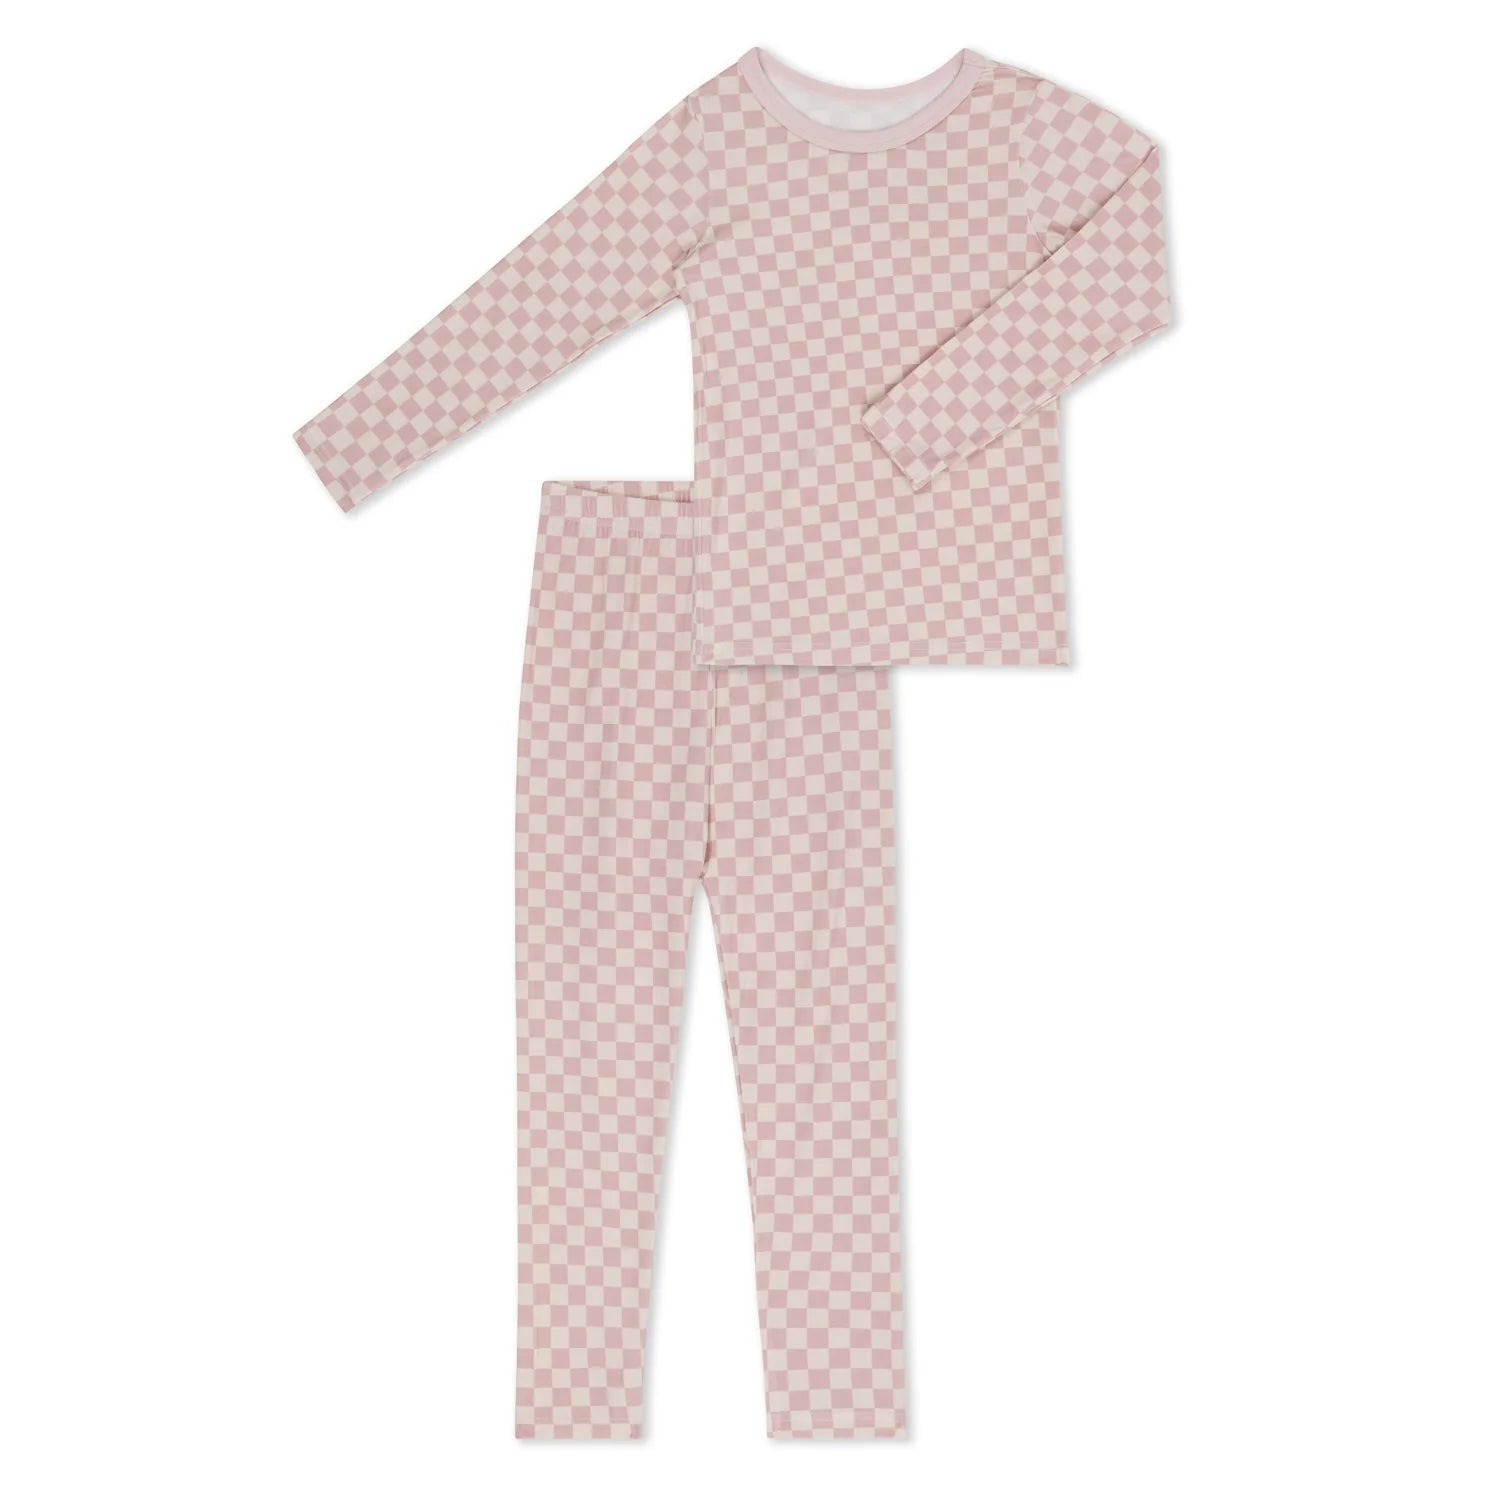 Pink Checkers Pajamas - Wren Harper